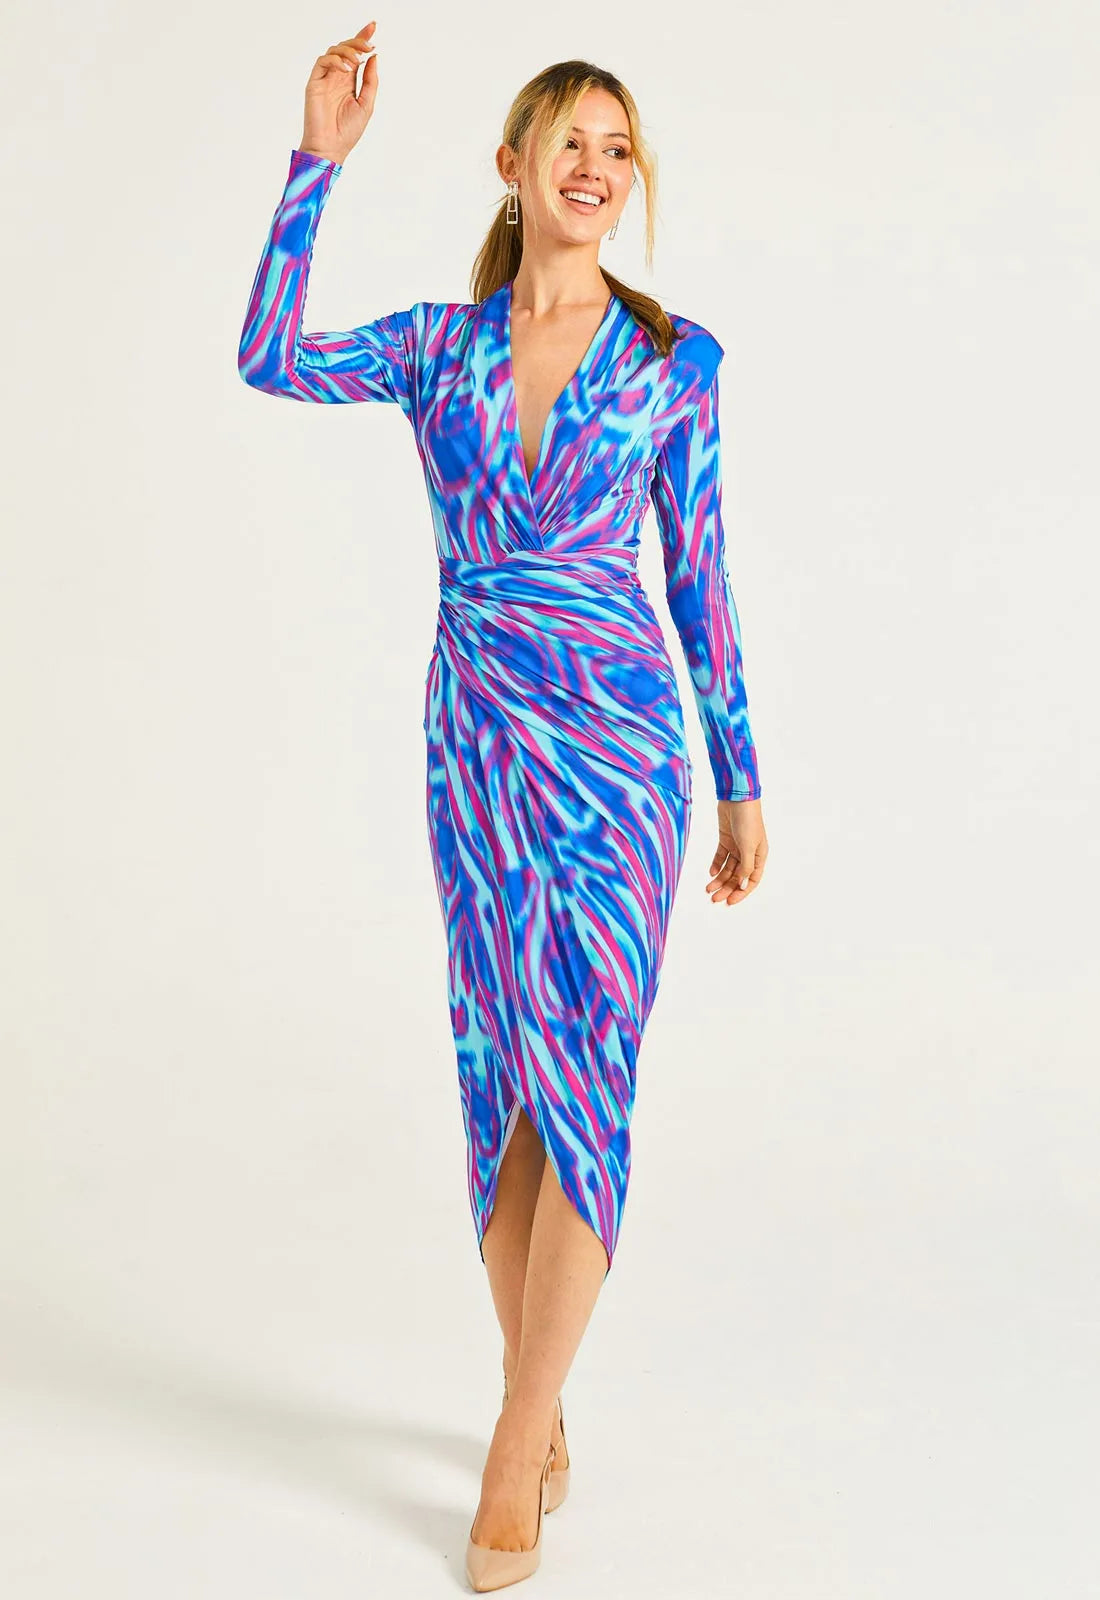 ANGELEYE Blue WaterFall Print Dress